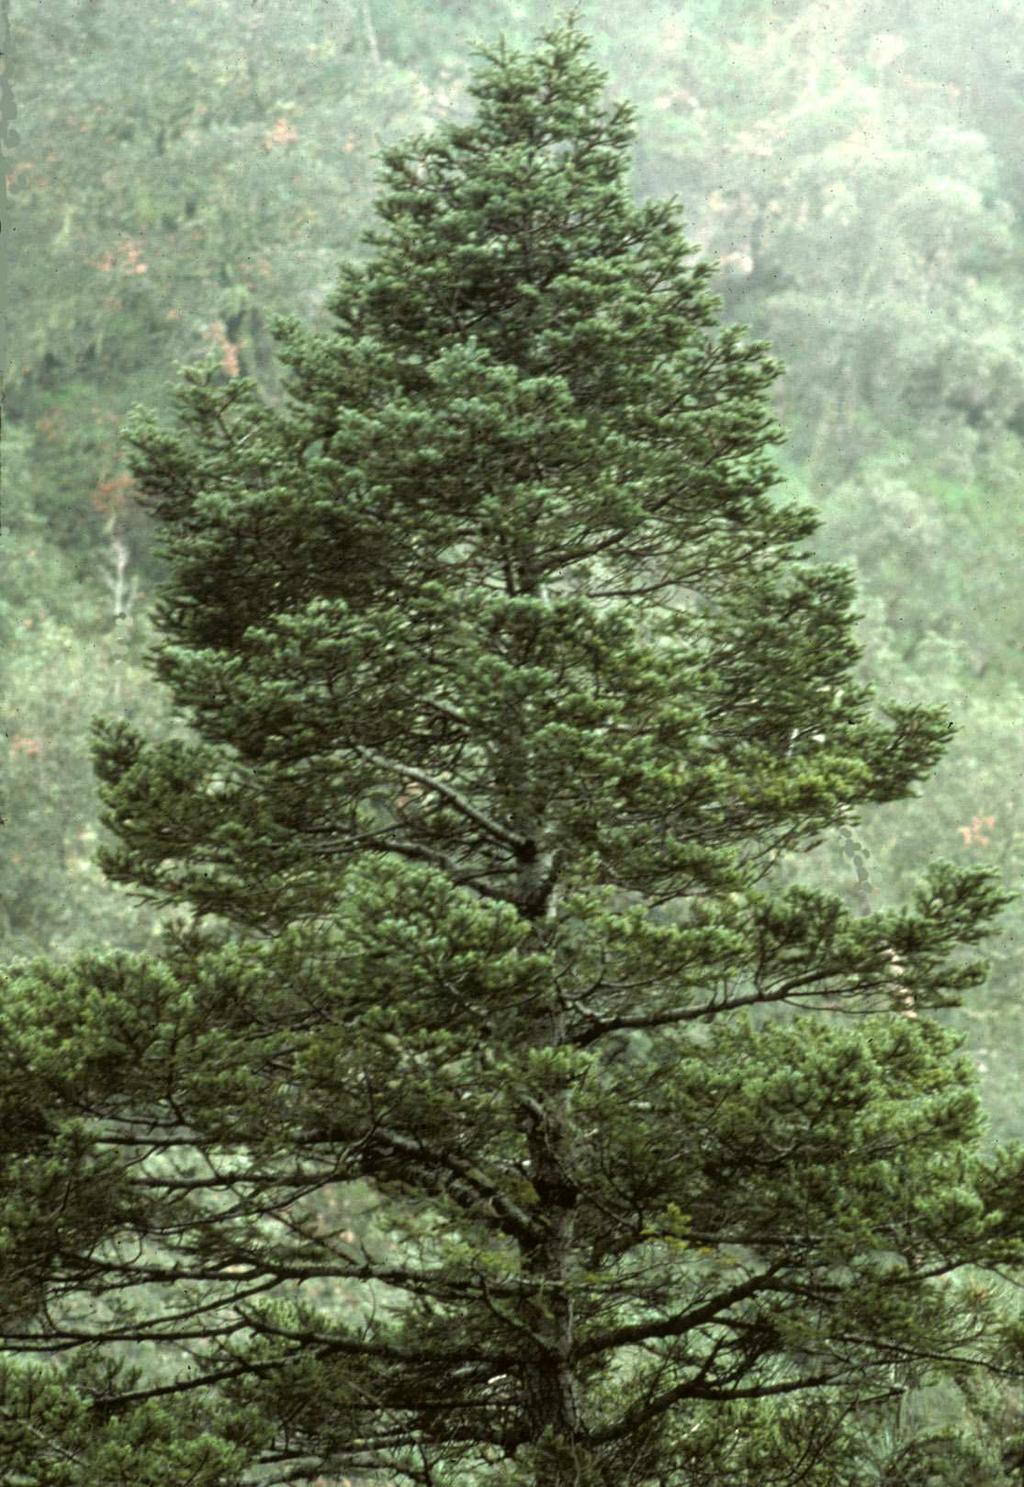 Van Devender and Reina-Guerrero: Flora of Yécora, Sonora 11 pines (P. arizonica, P. engelmannii, P. yecorensis, plus 6 other species) and Arizona madrone/madroño (Arbutus arizonica; Fig. 4B).